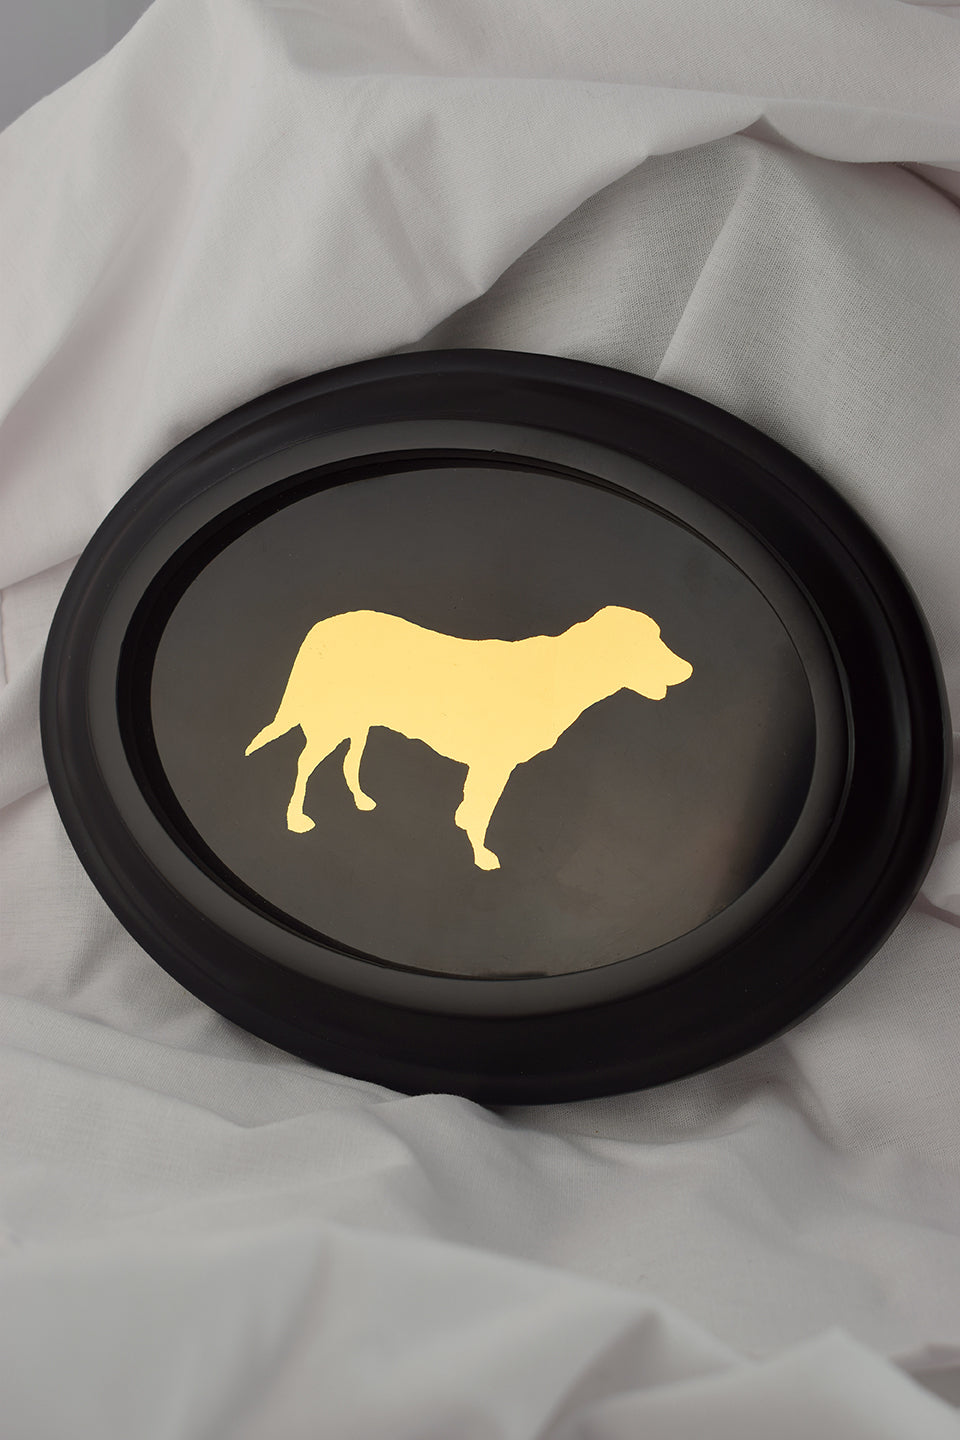 custom mirrored gold sihouette portrait of dog